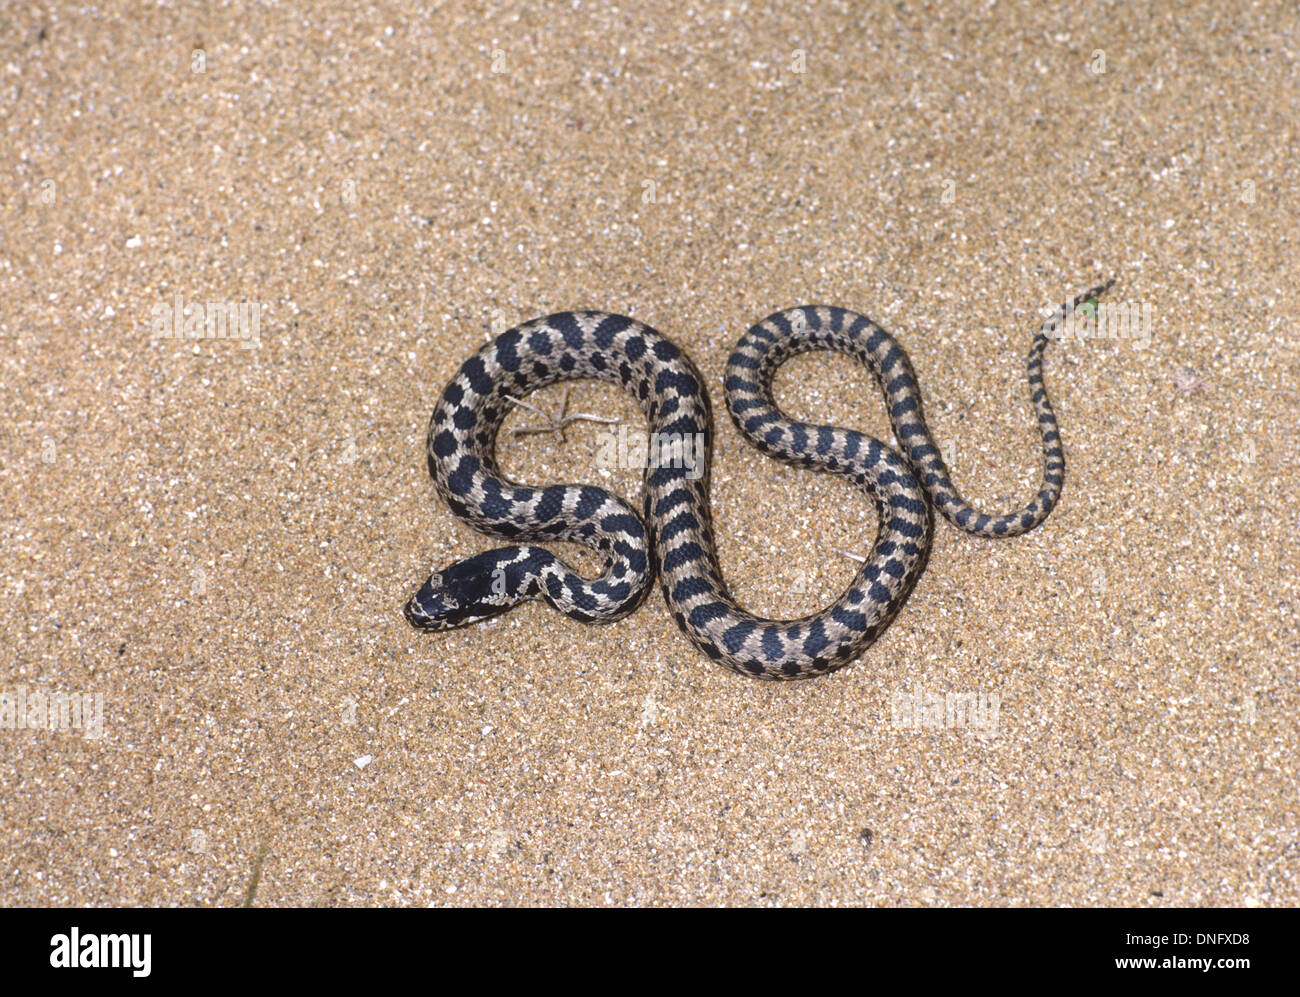 Four-Lined Snake.  Elaphe quatuorlineata single juvenile snake. Greece. Stock Photo